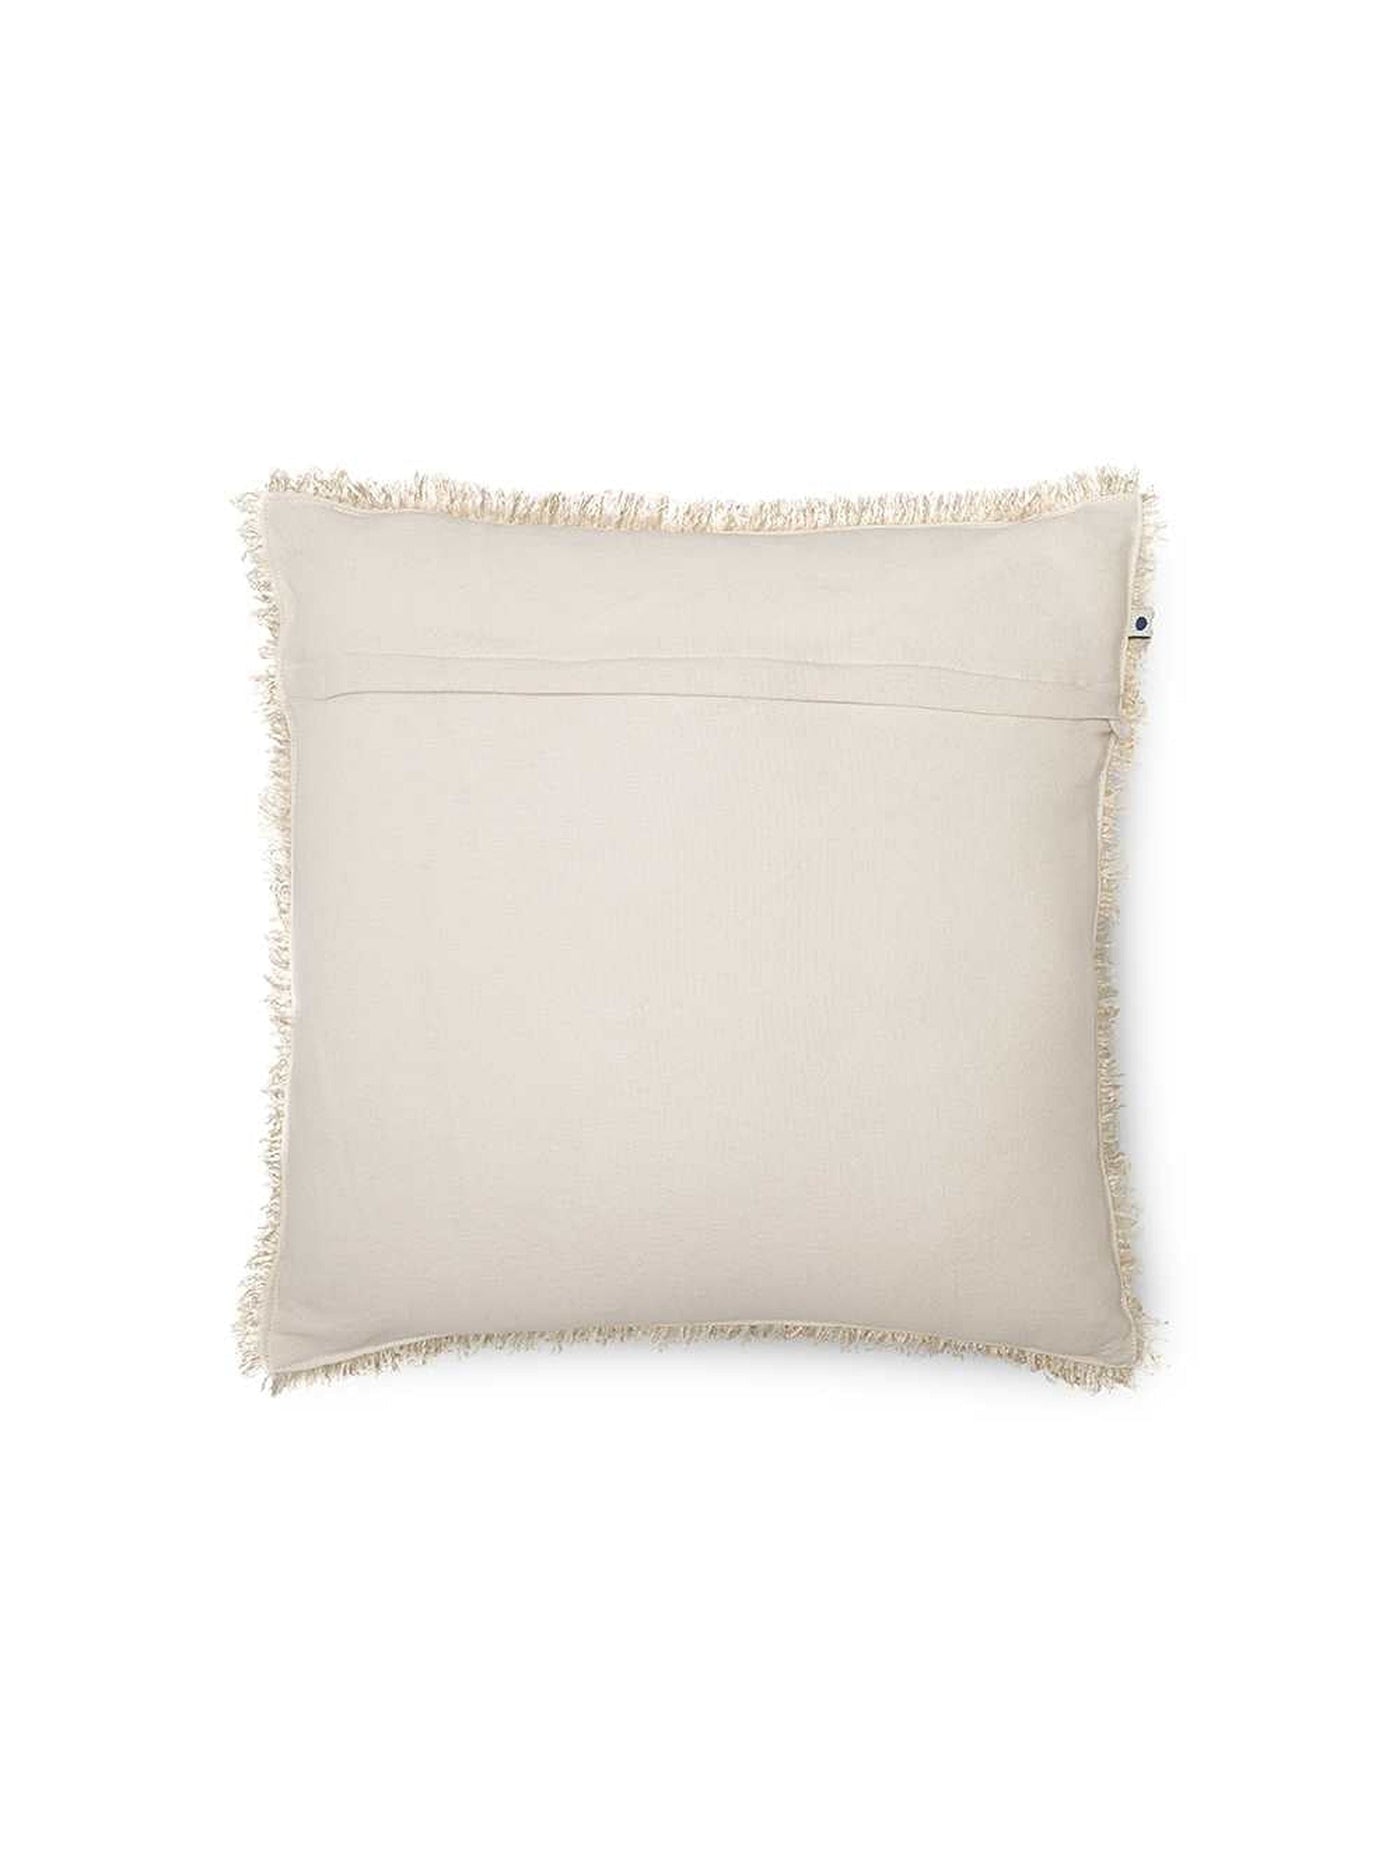 Luxe Cushion Cover Neutral